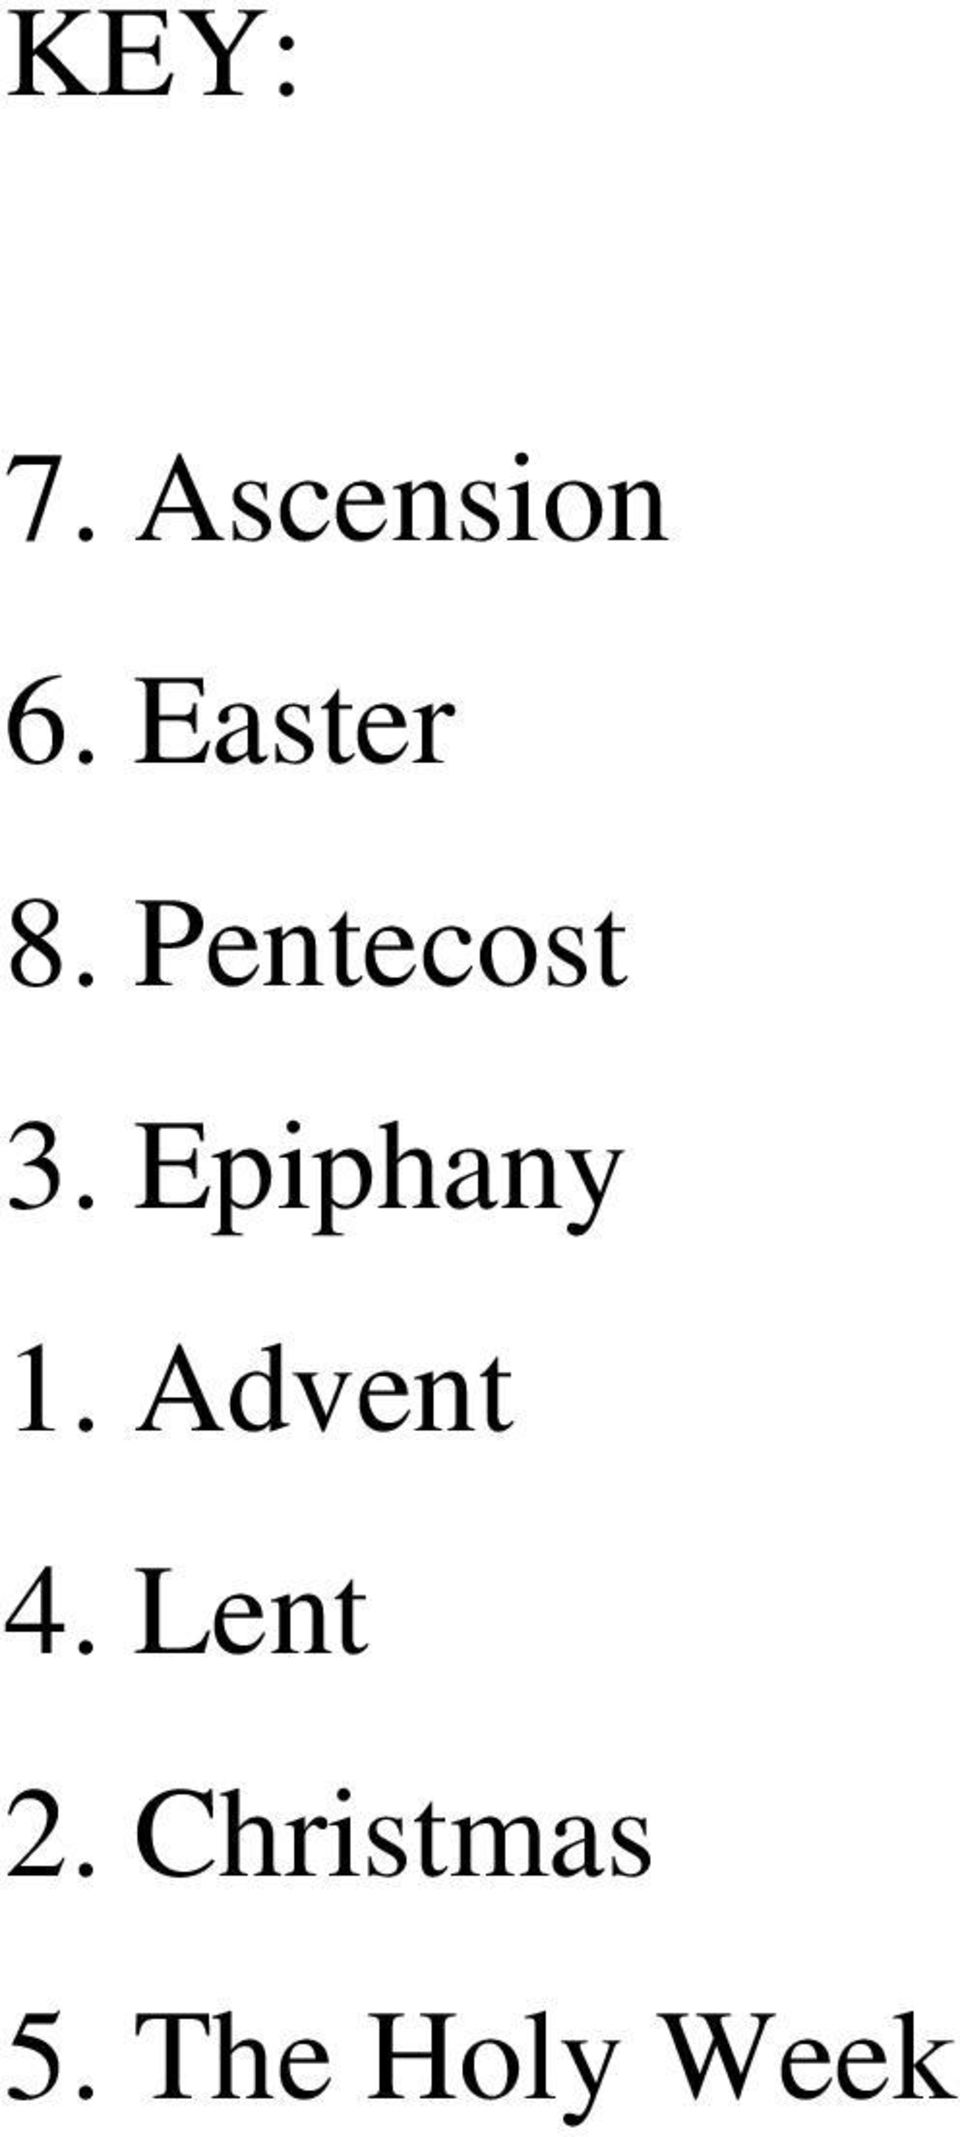 Epiphany 1. Advent 4.